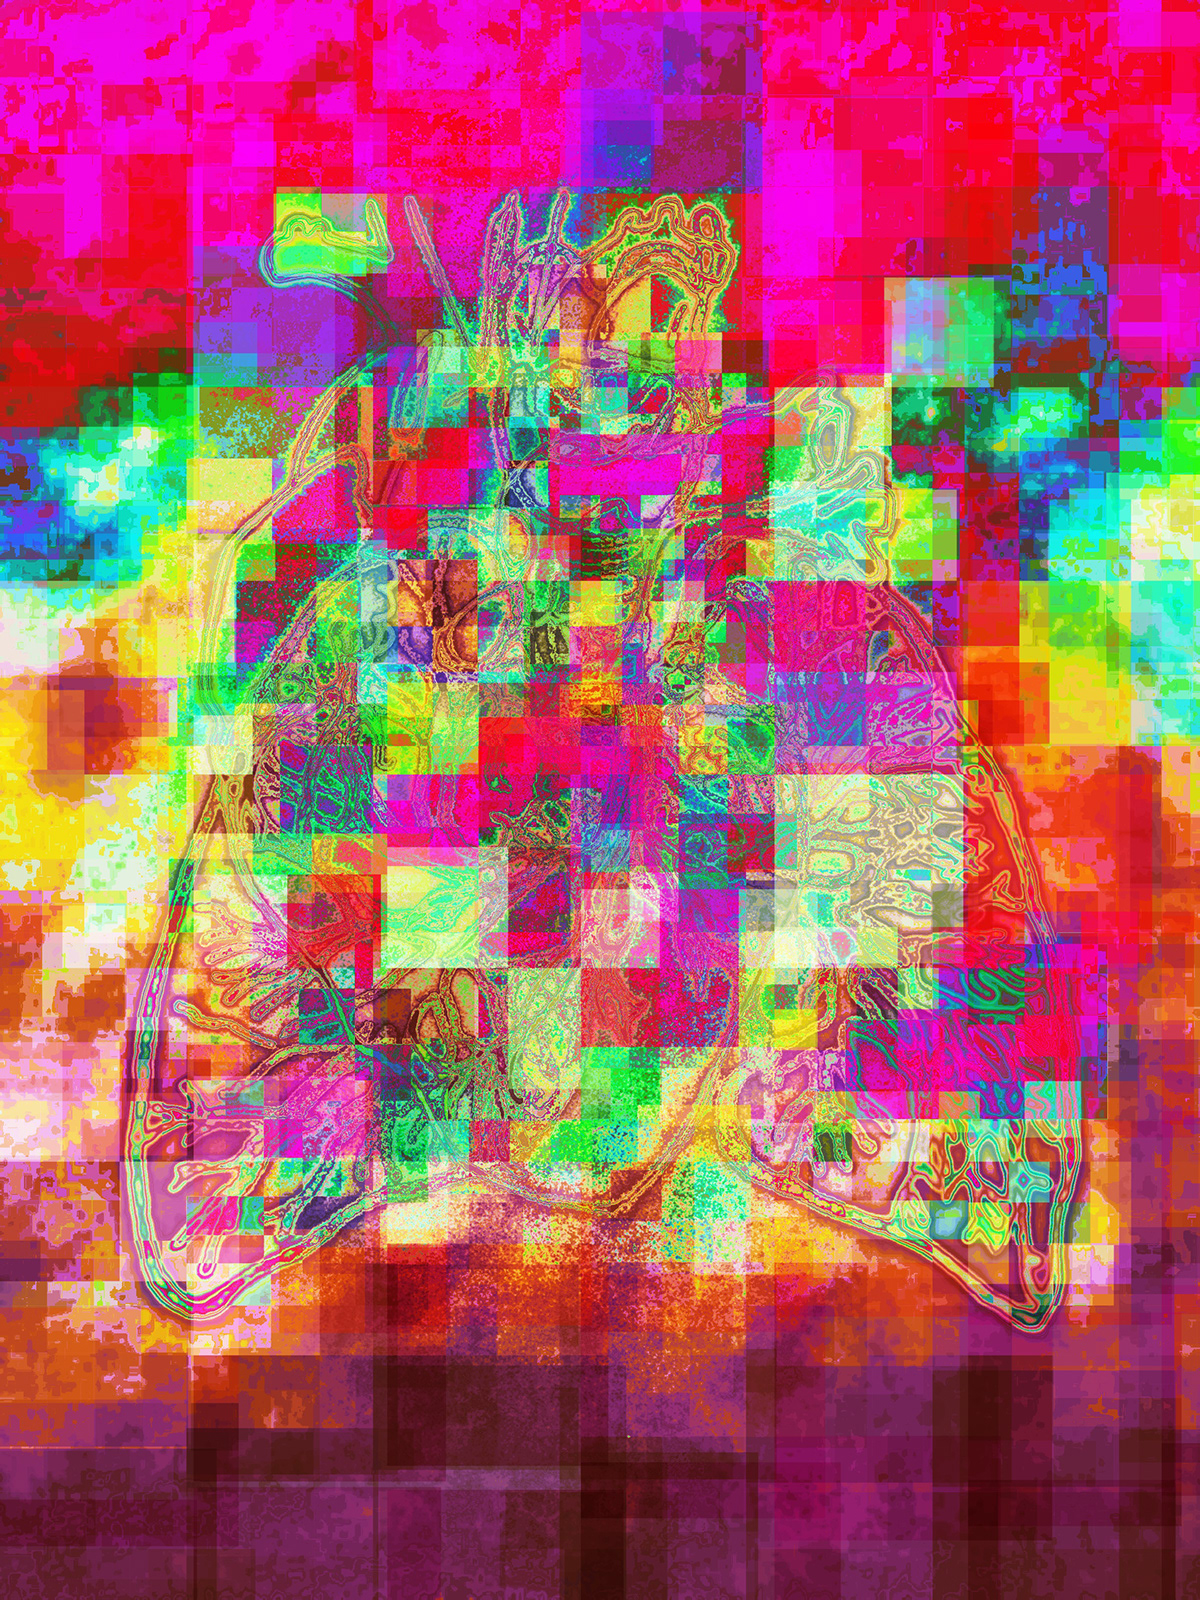 Glitch digital art photo image human integration colors pixel iphone cellphoneography